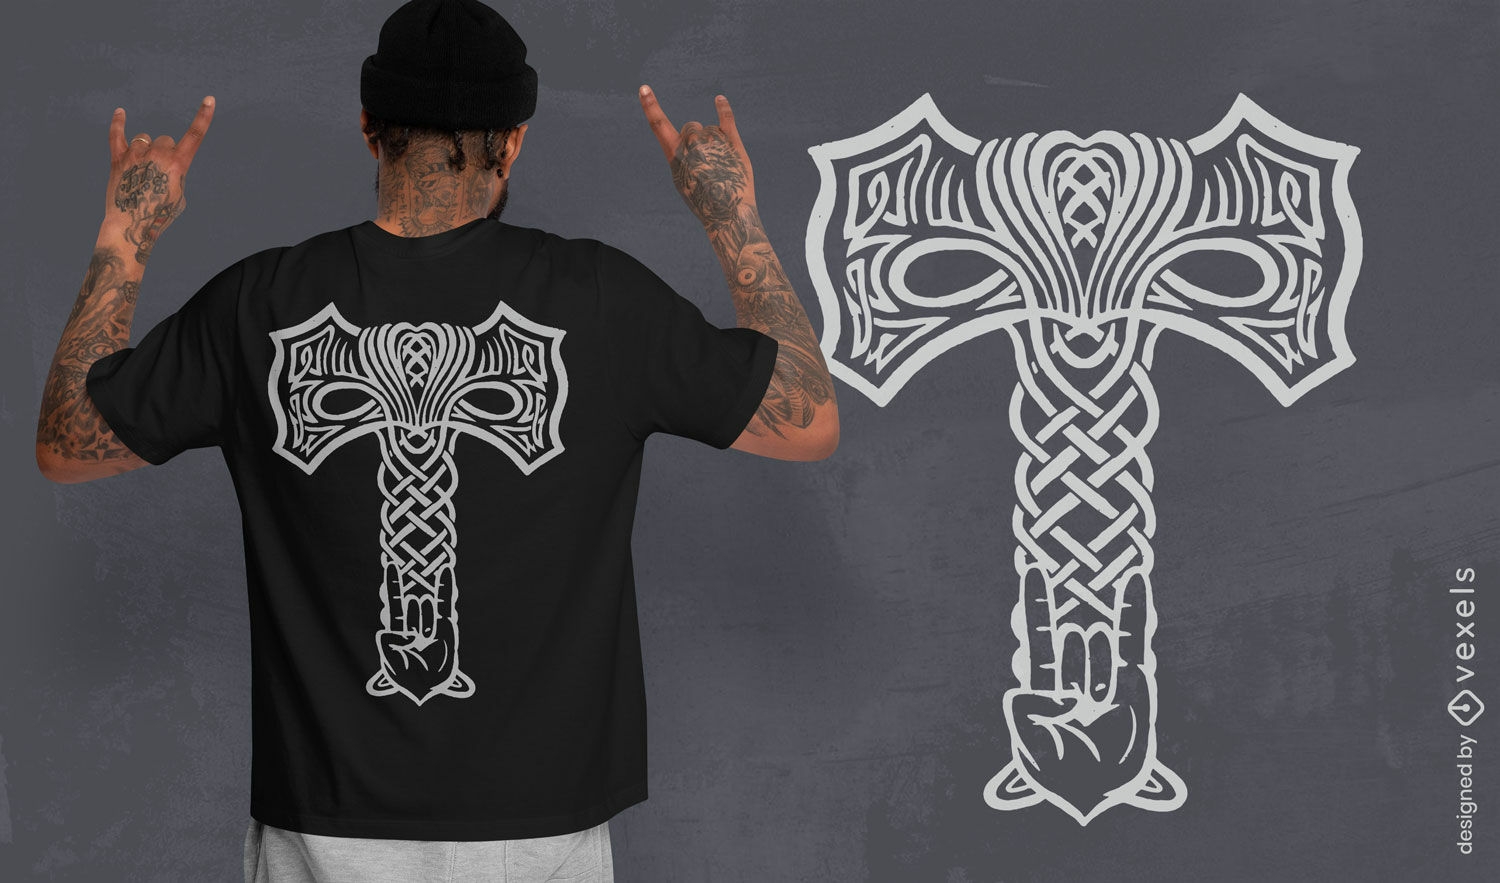 Norse Mjolnir t-shirt design